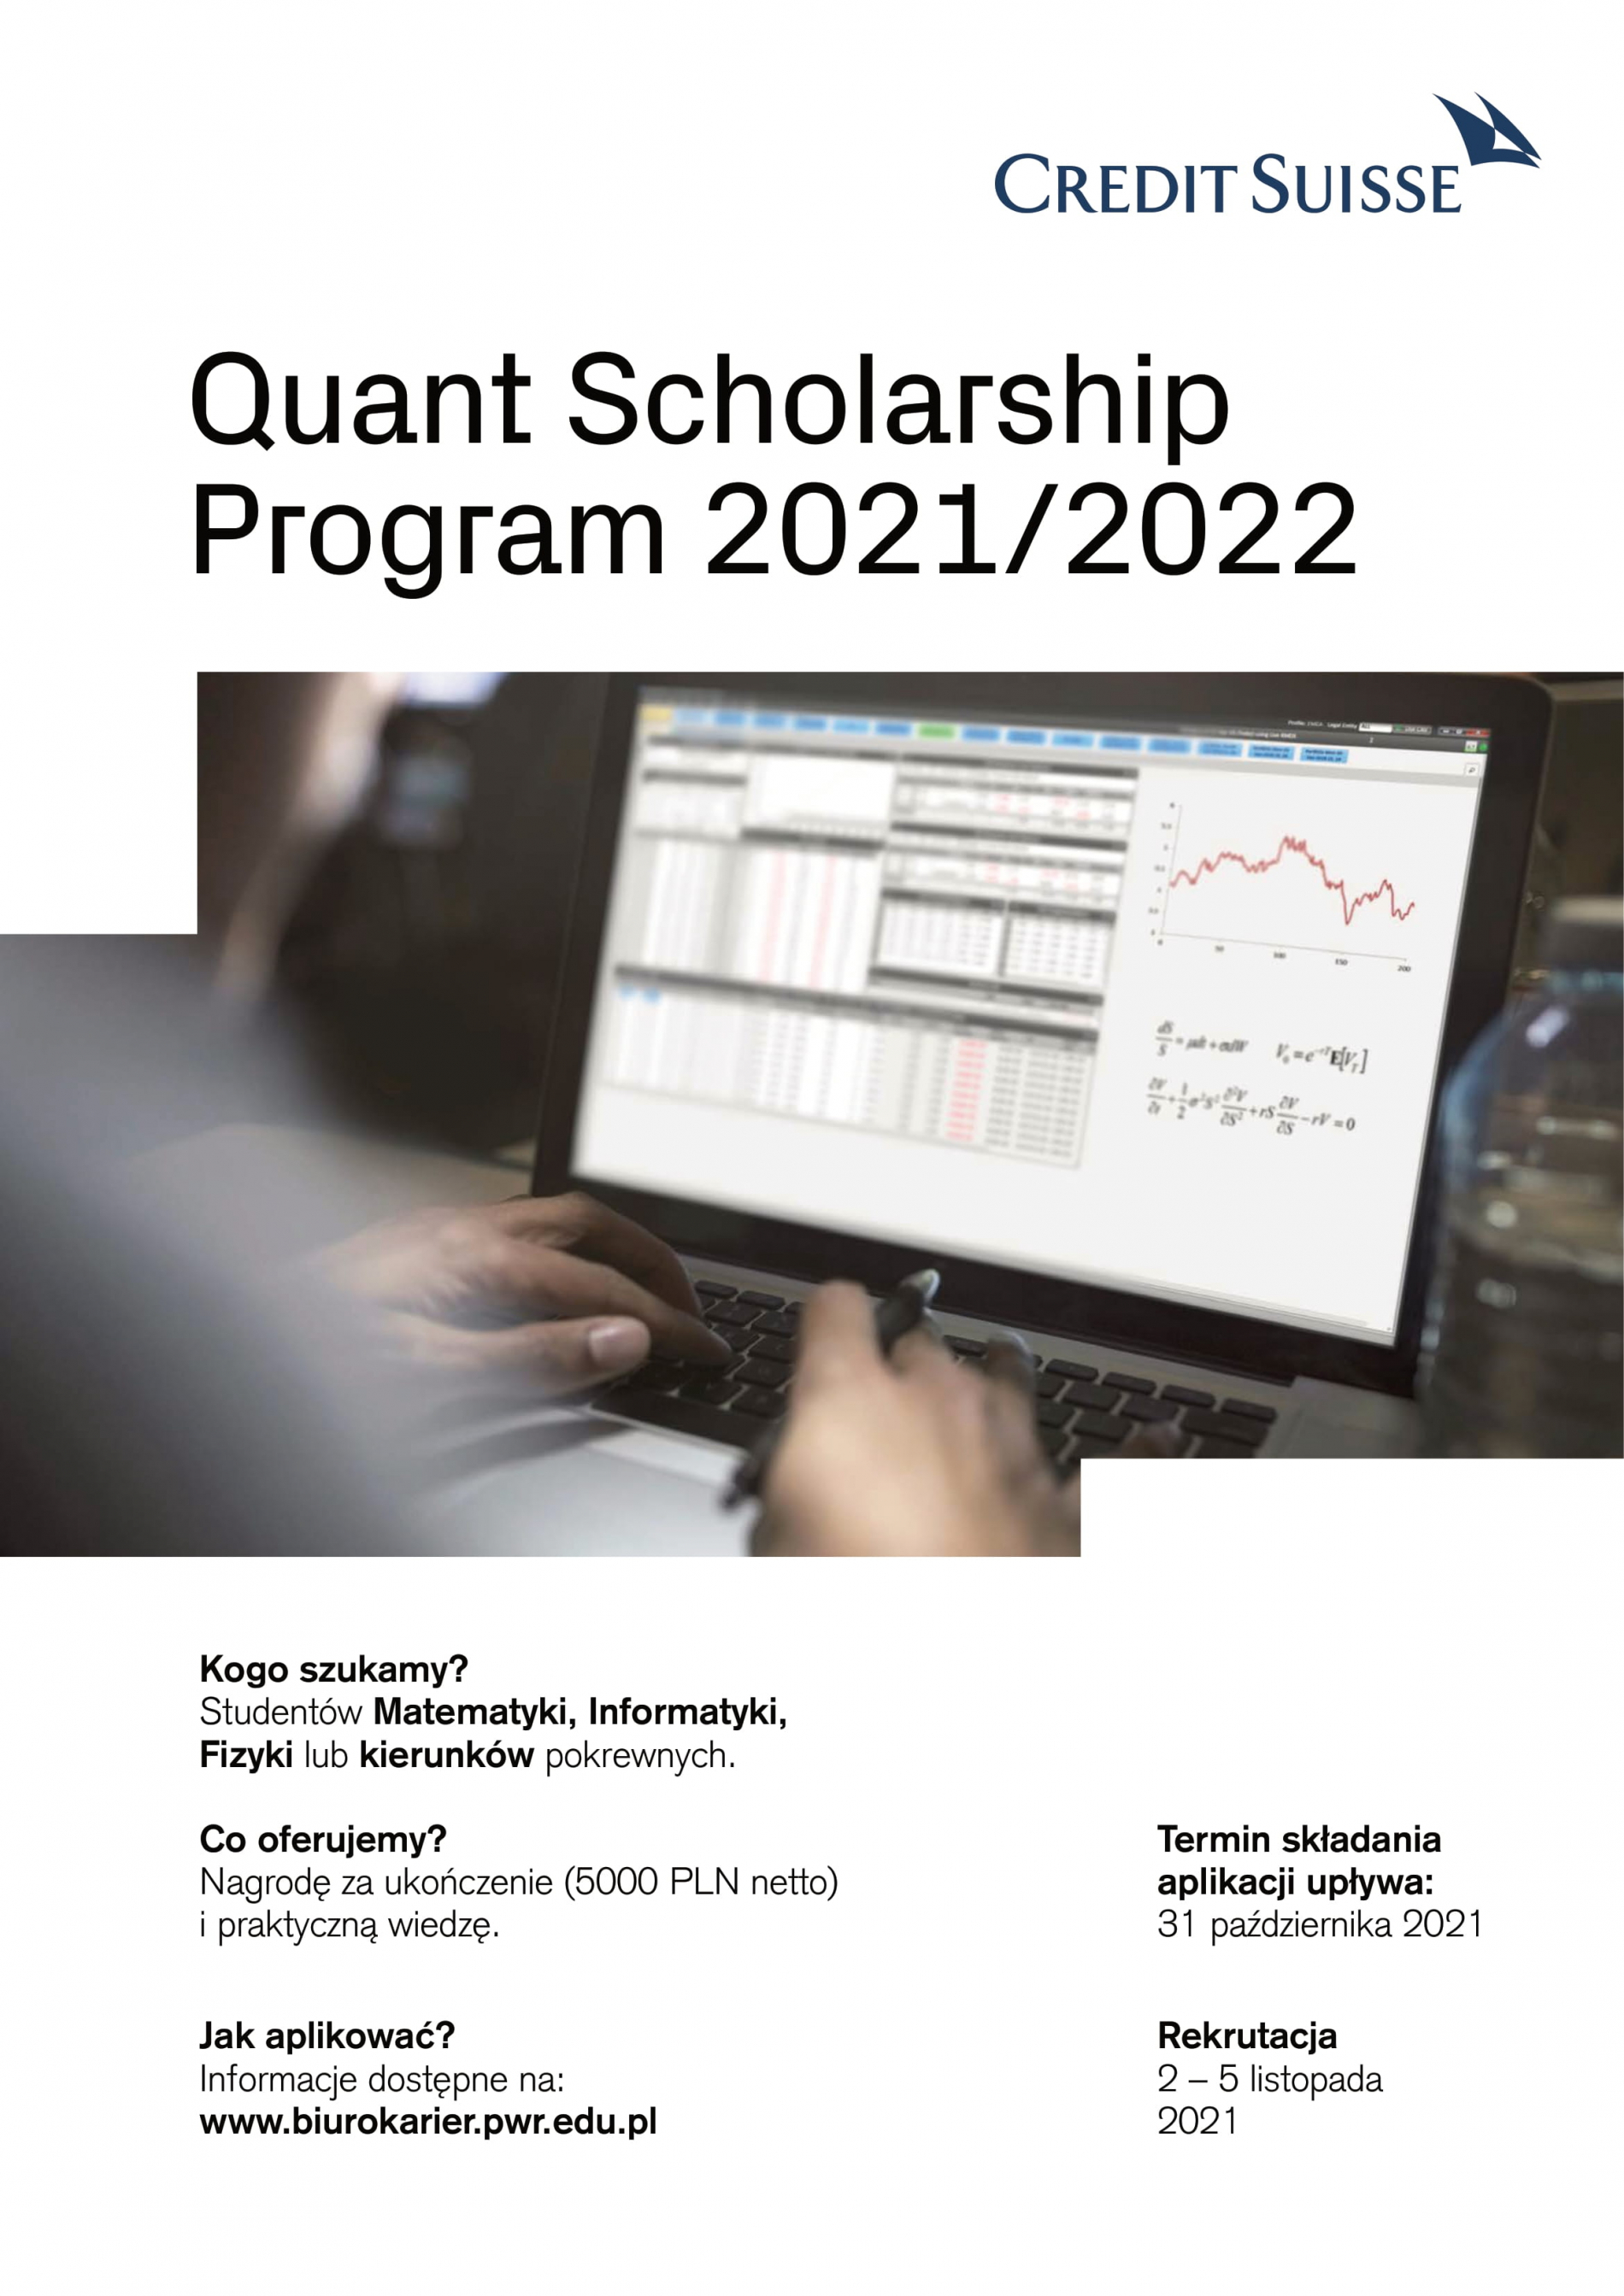 quant_scholarship_pl_2021_web-1.jpg